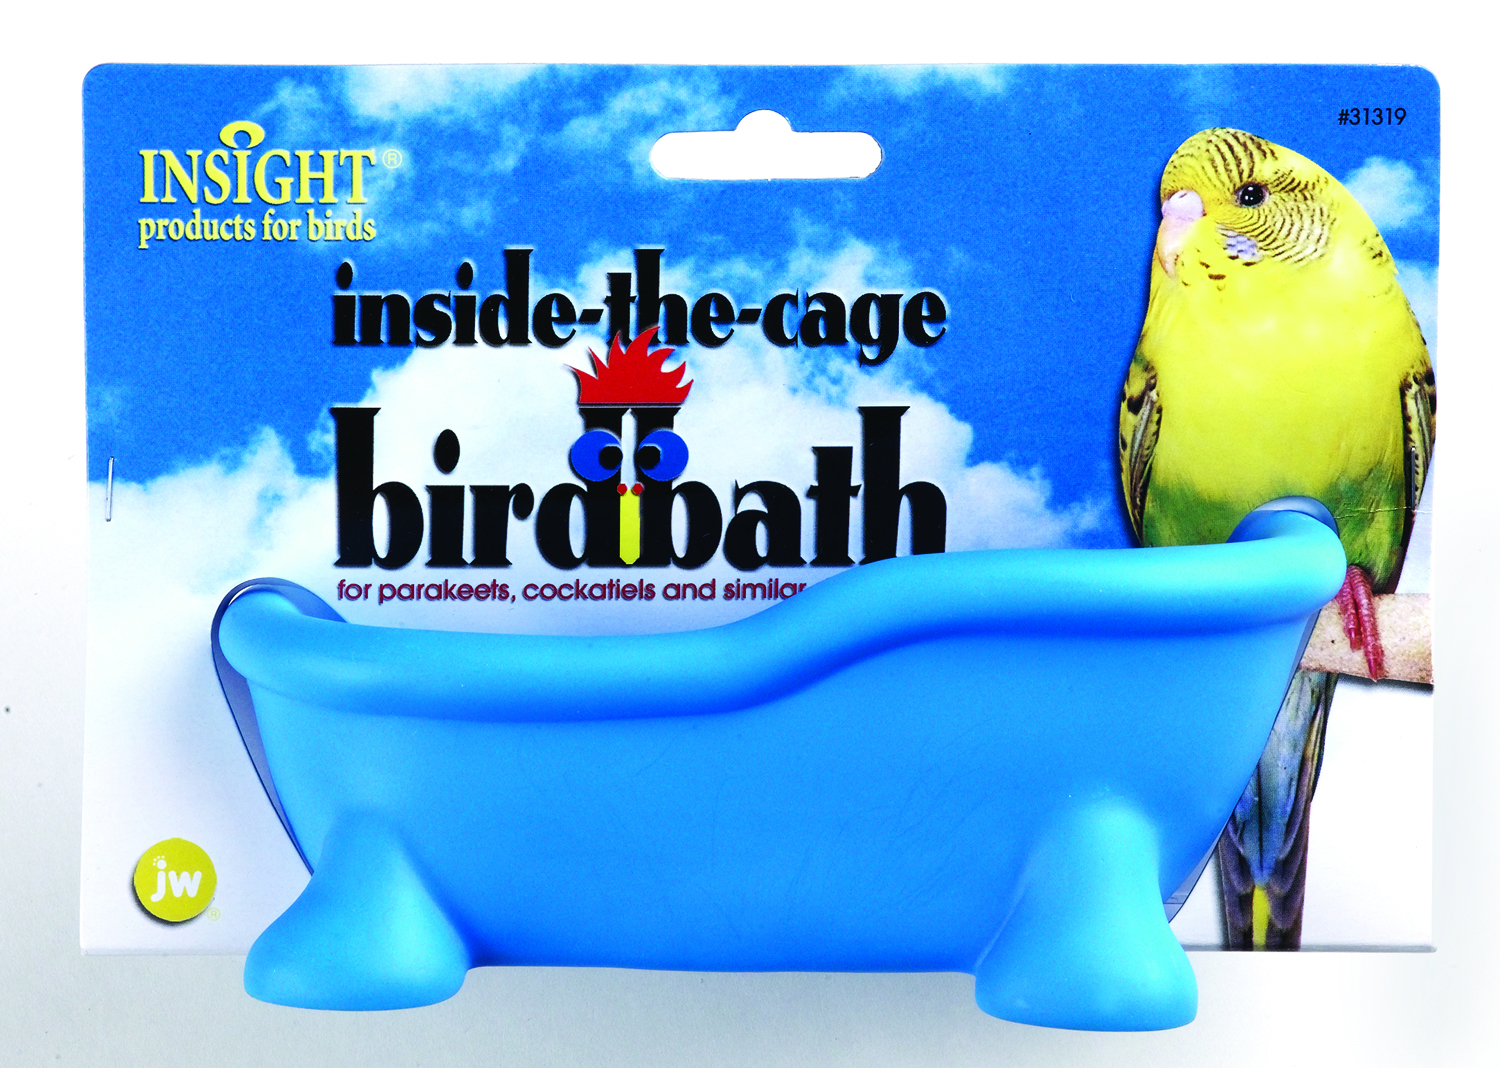 INSIGHT INSIDE-THE-CAGE BIRDBATH